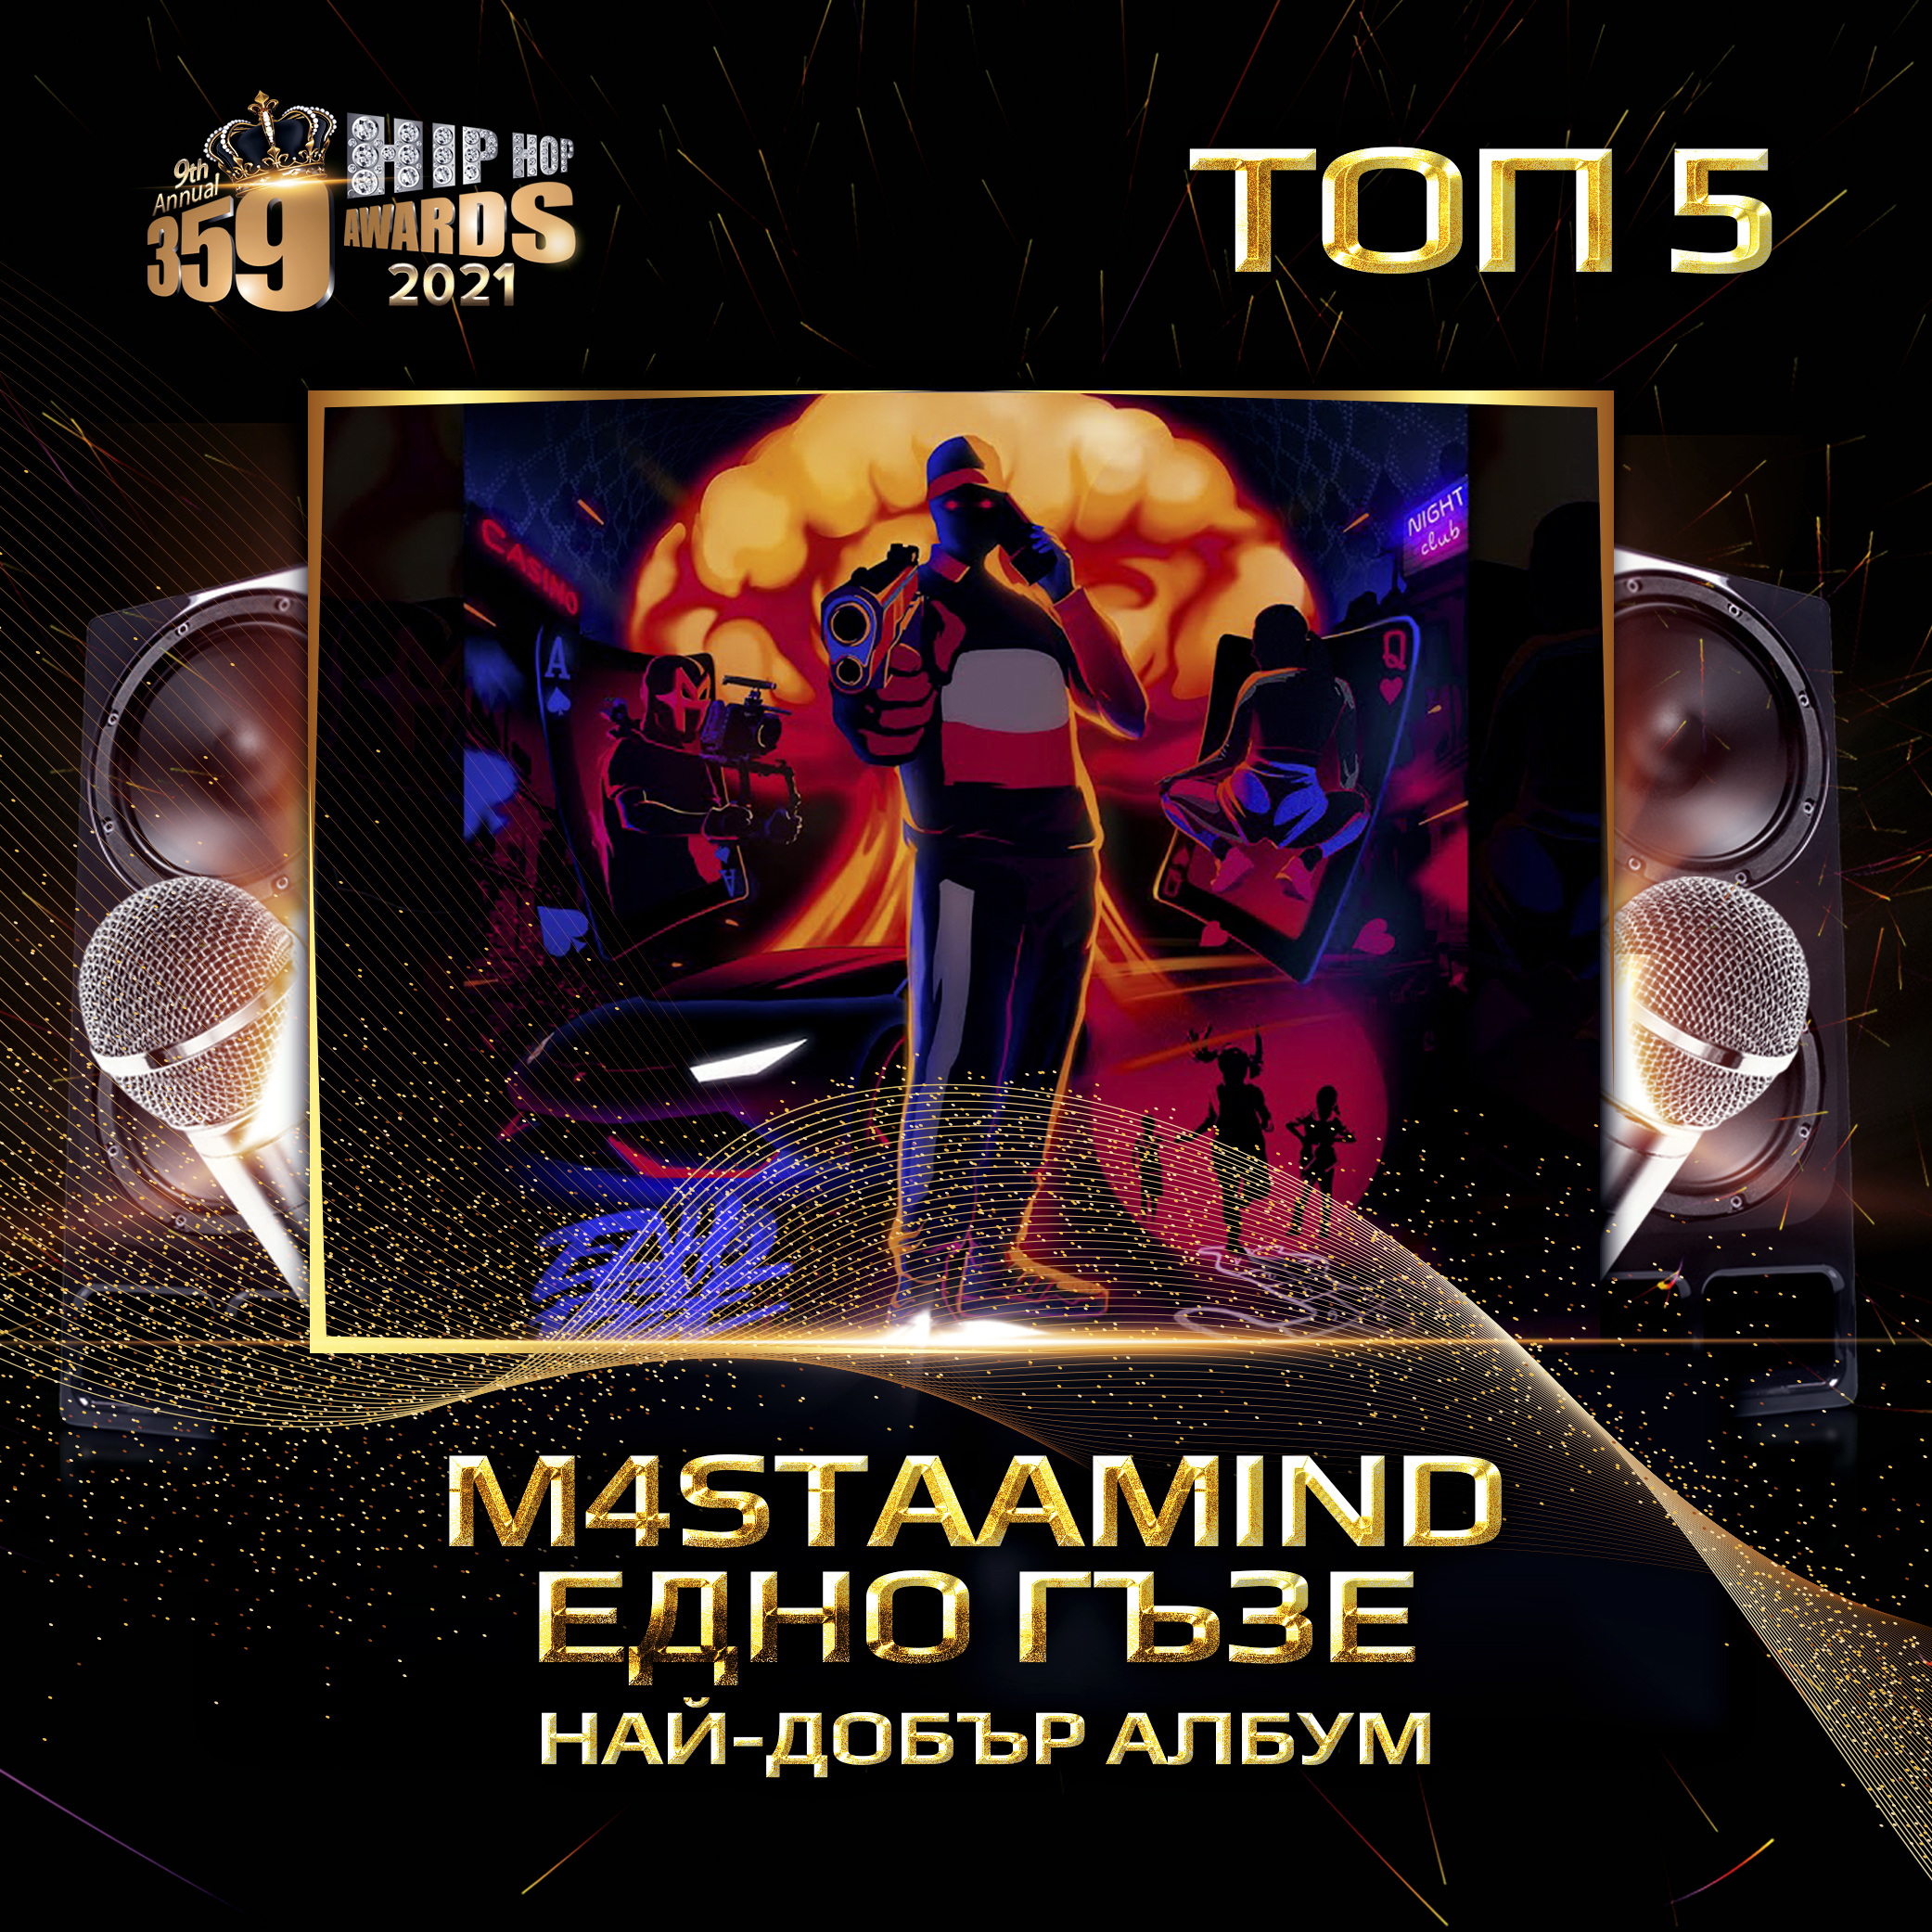 top 5  359 awards 2021 naj dobar album m4staamind edno gaze - Най-добър албум 2020